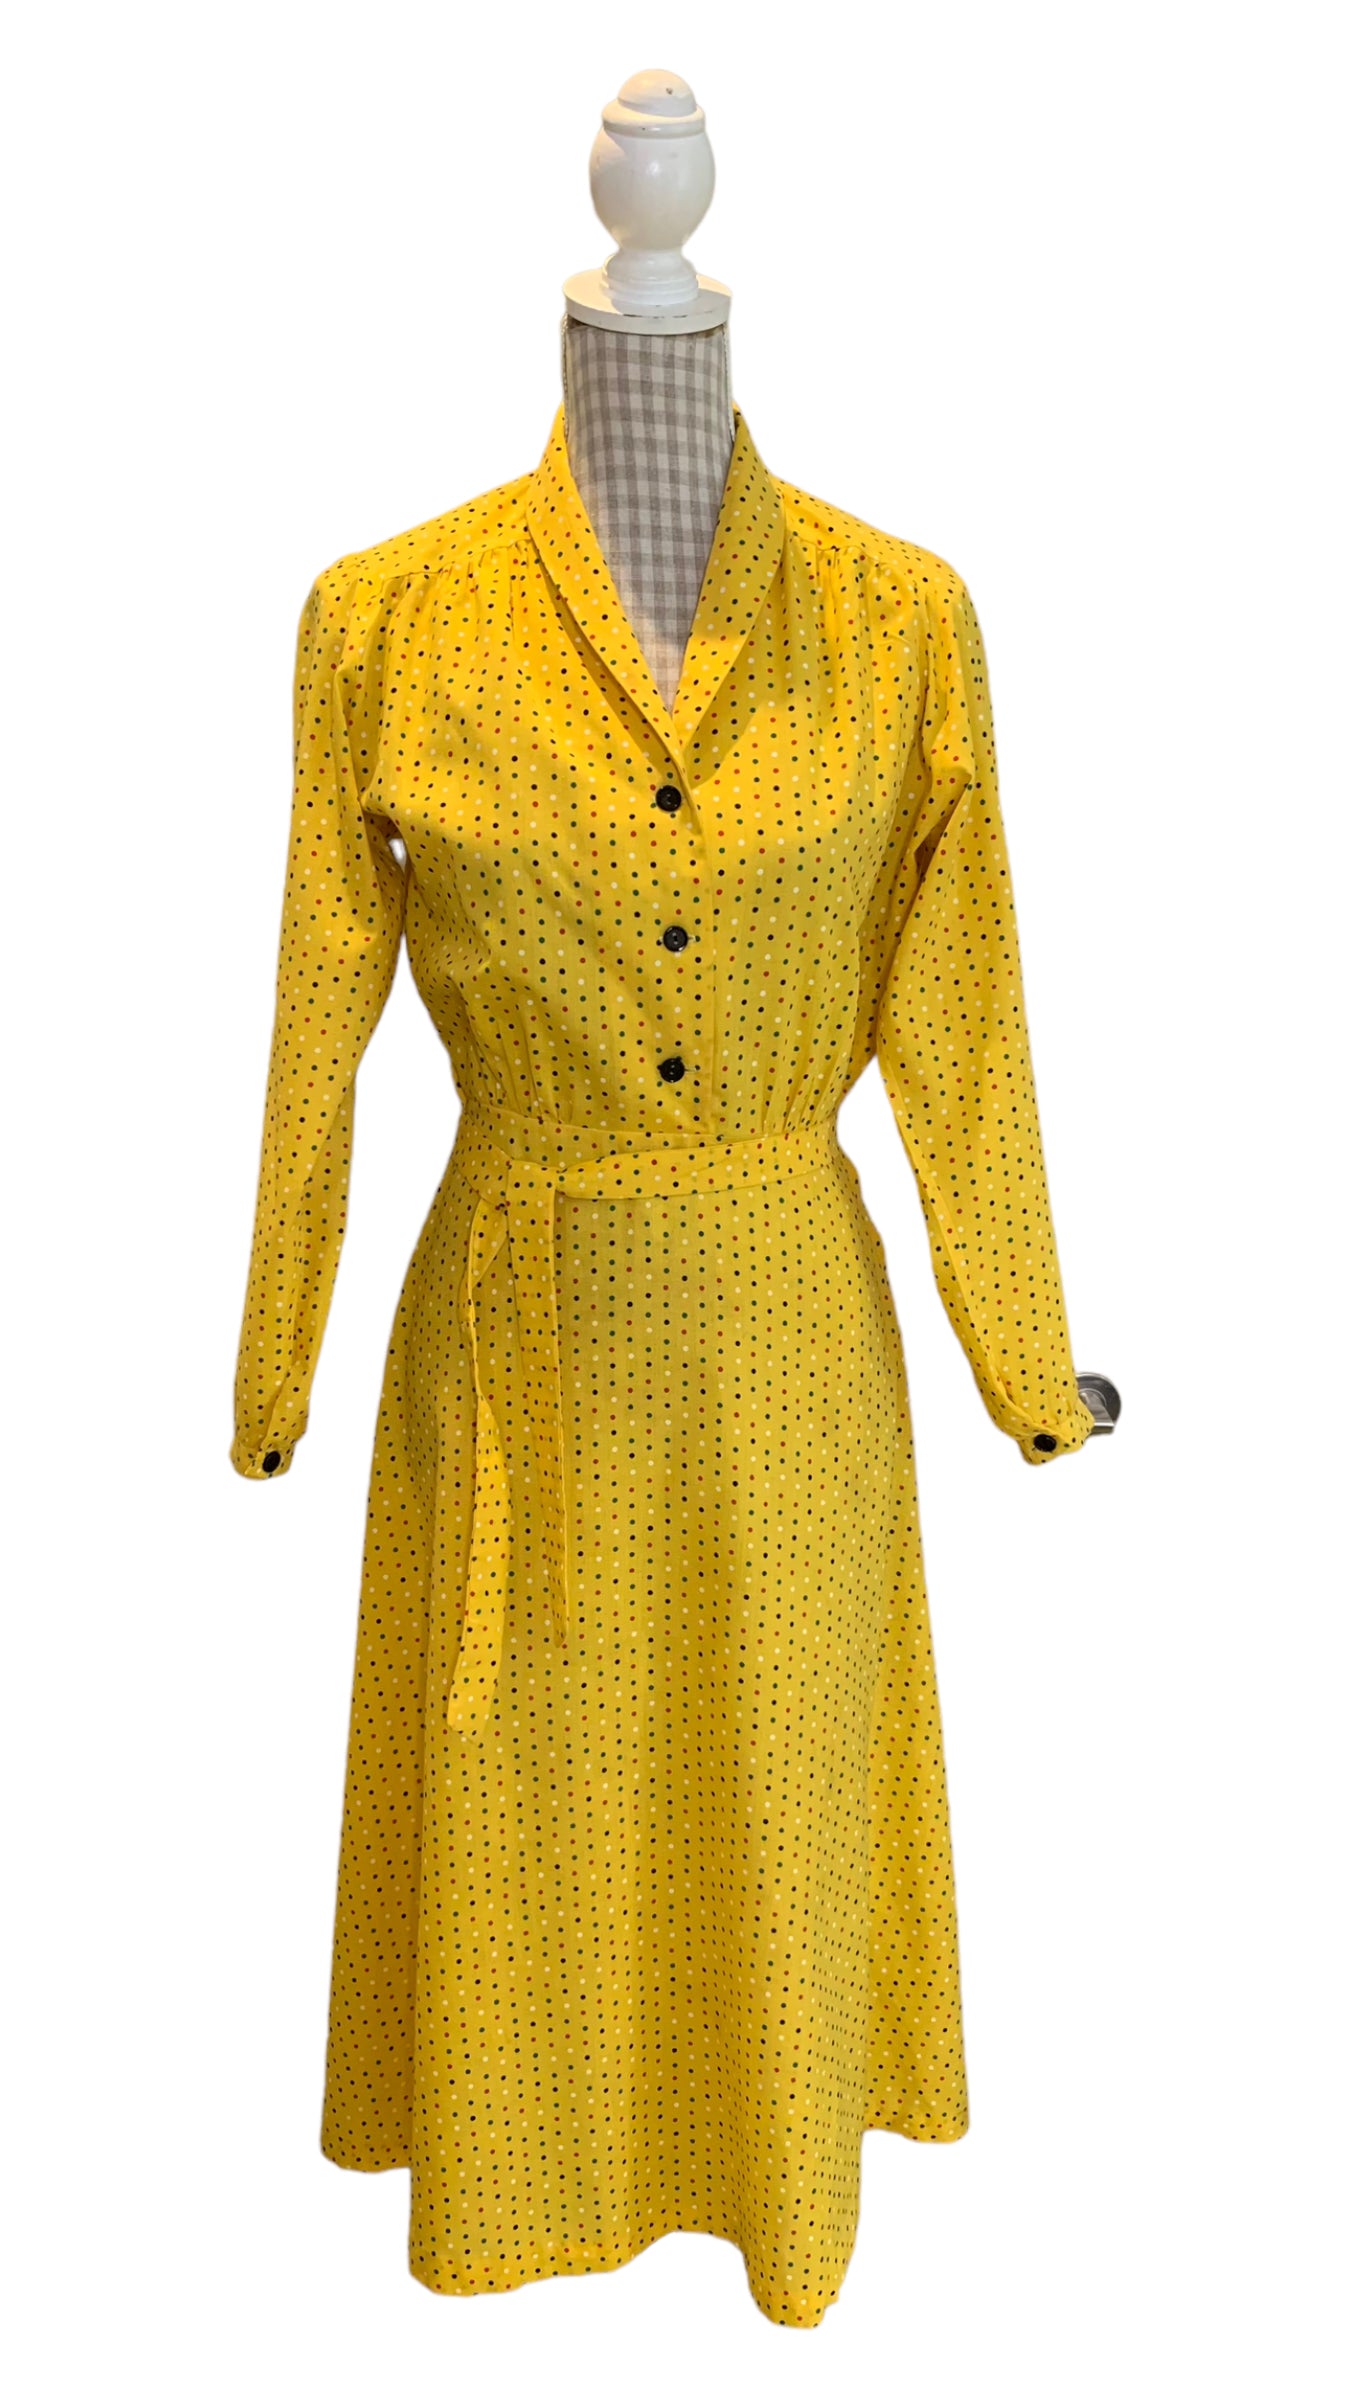 50s Vintage Yellow Polkadot Print Dress Size UK 10